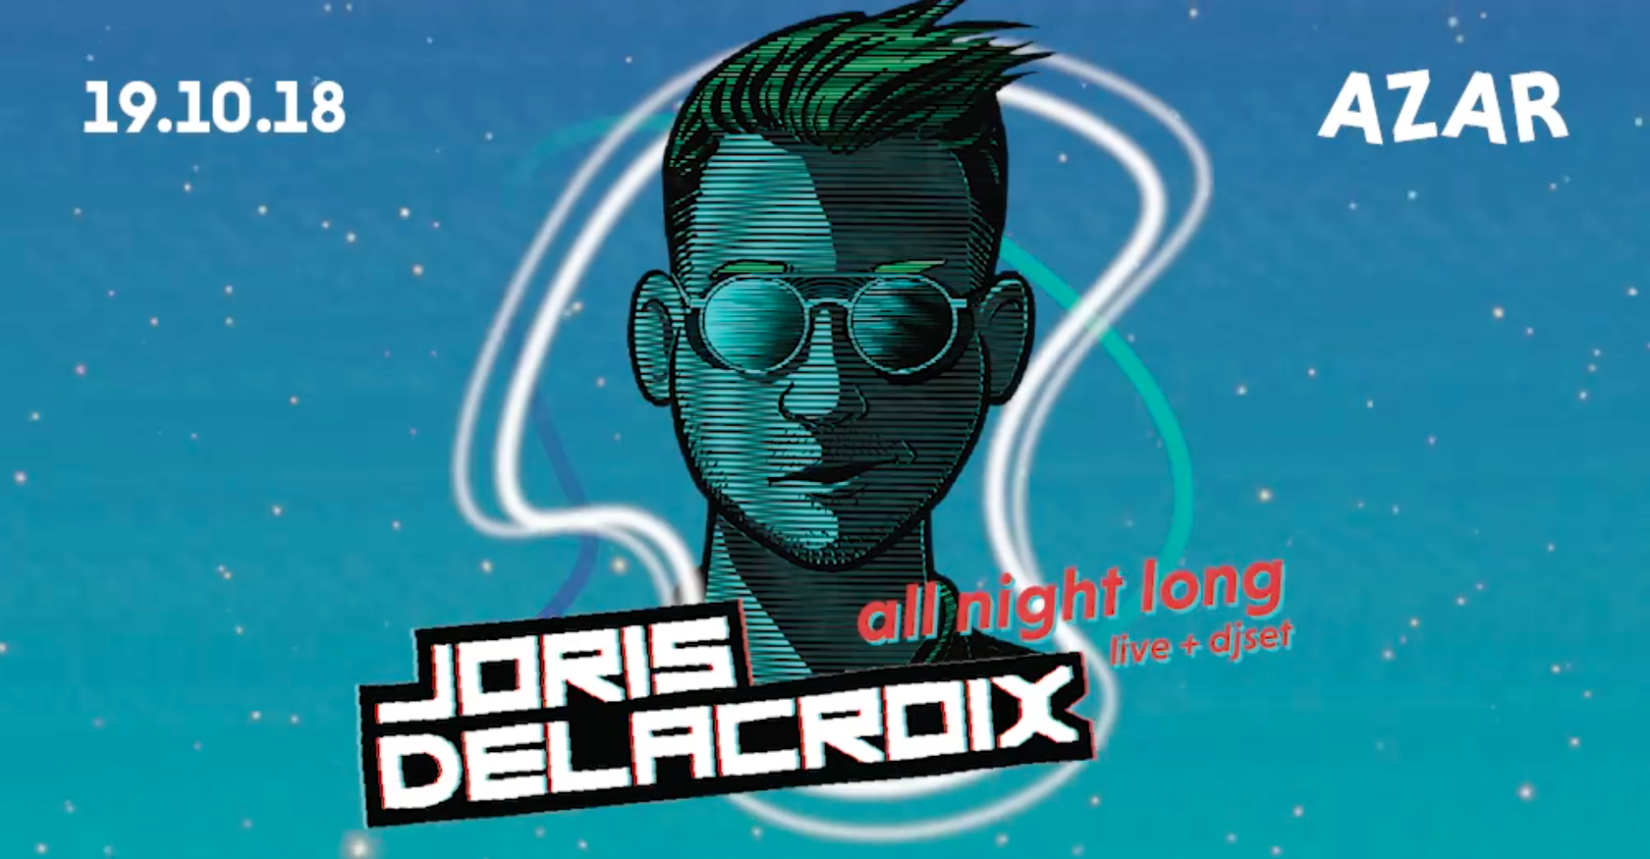 Joris Delacroix Live + Dj set